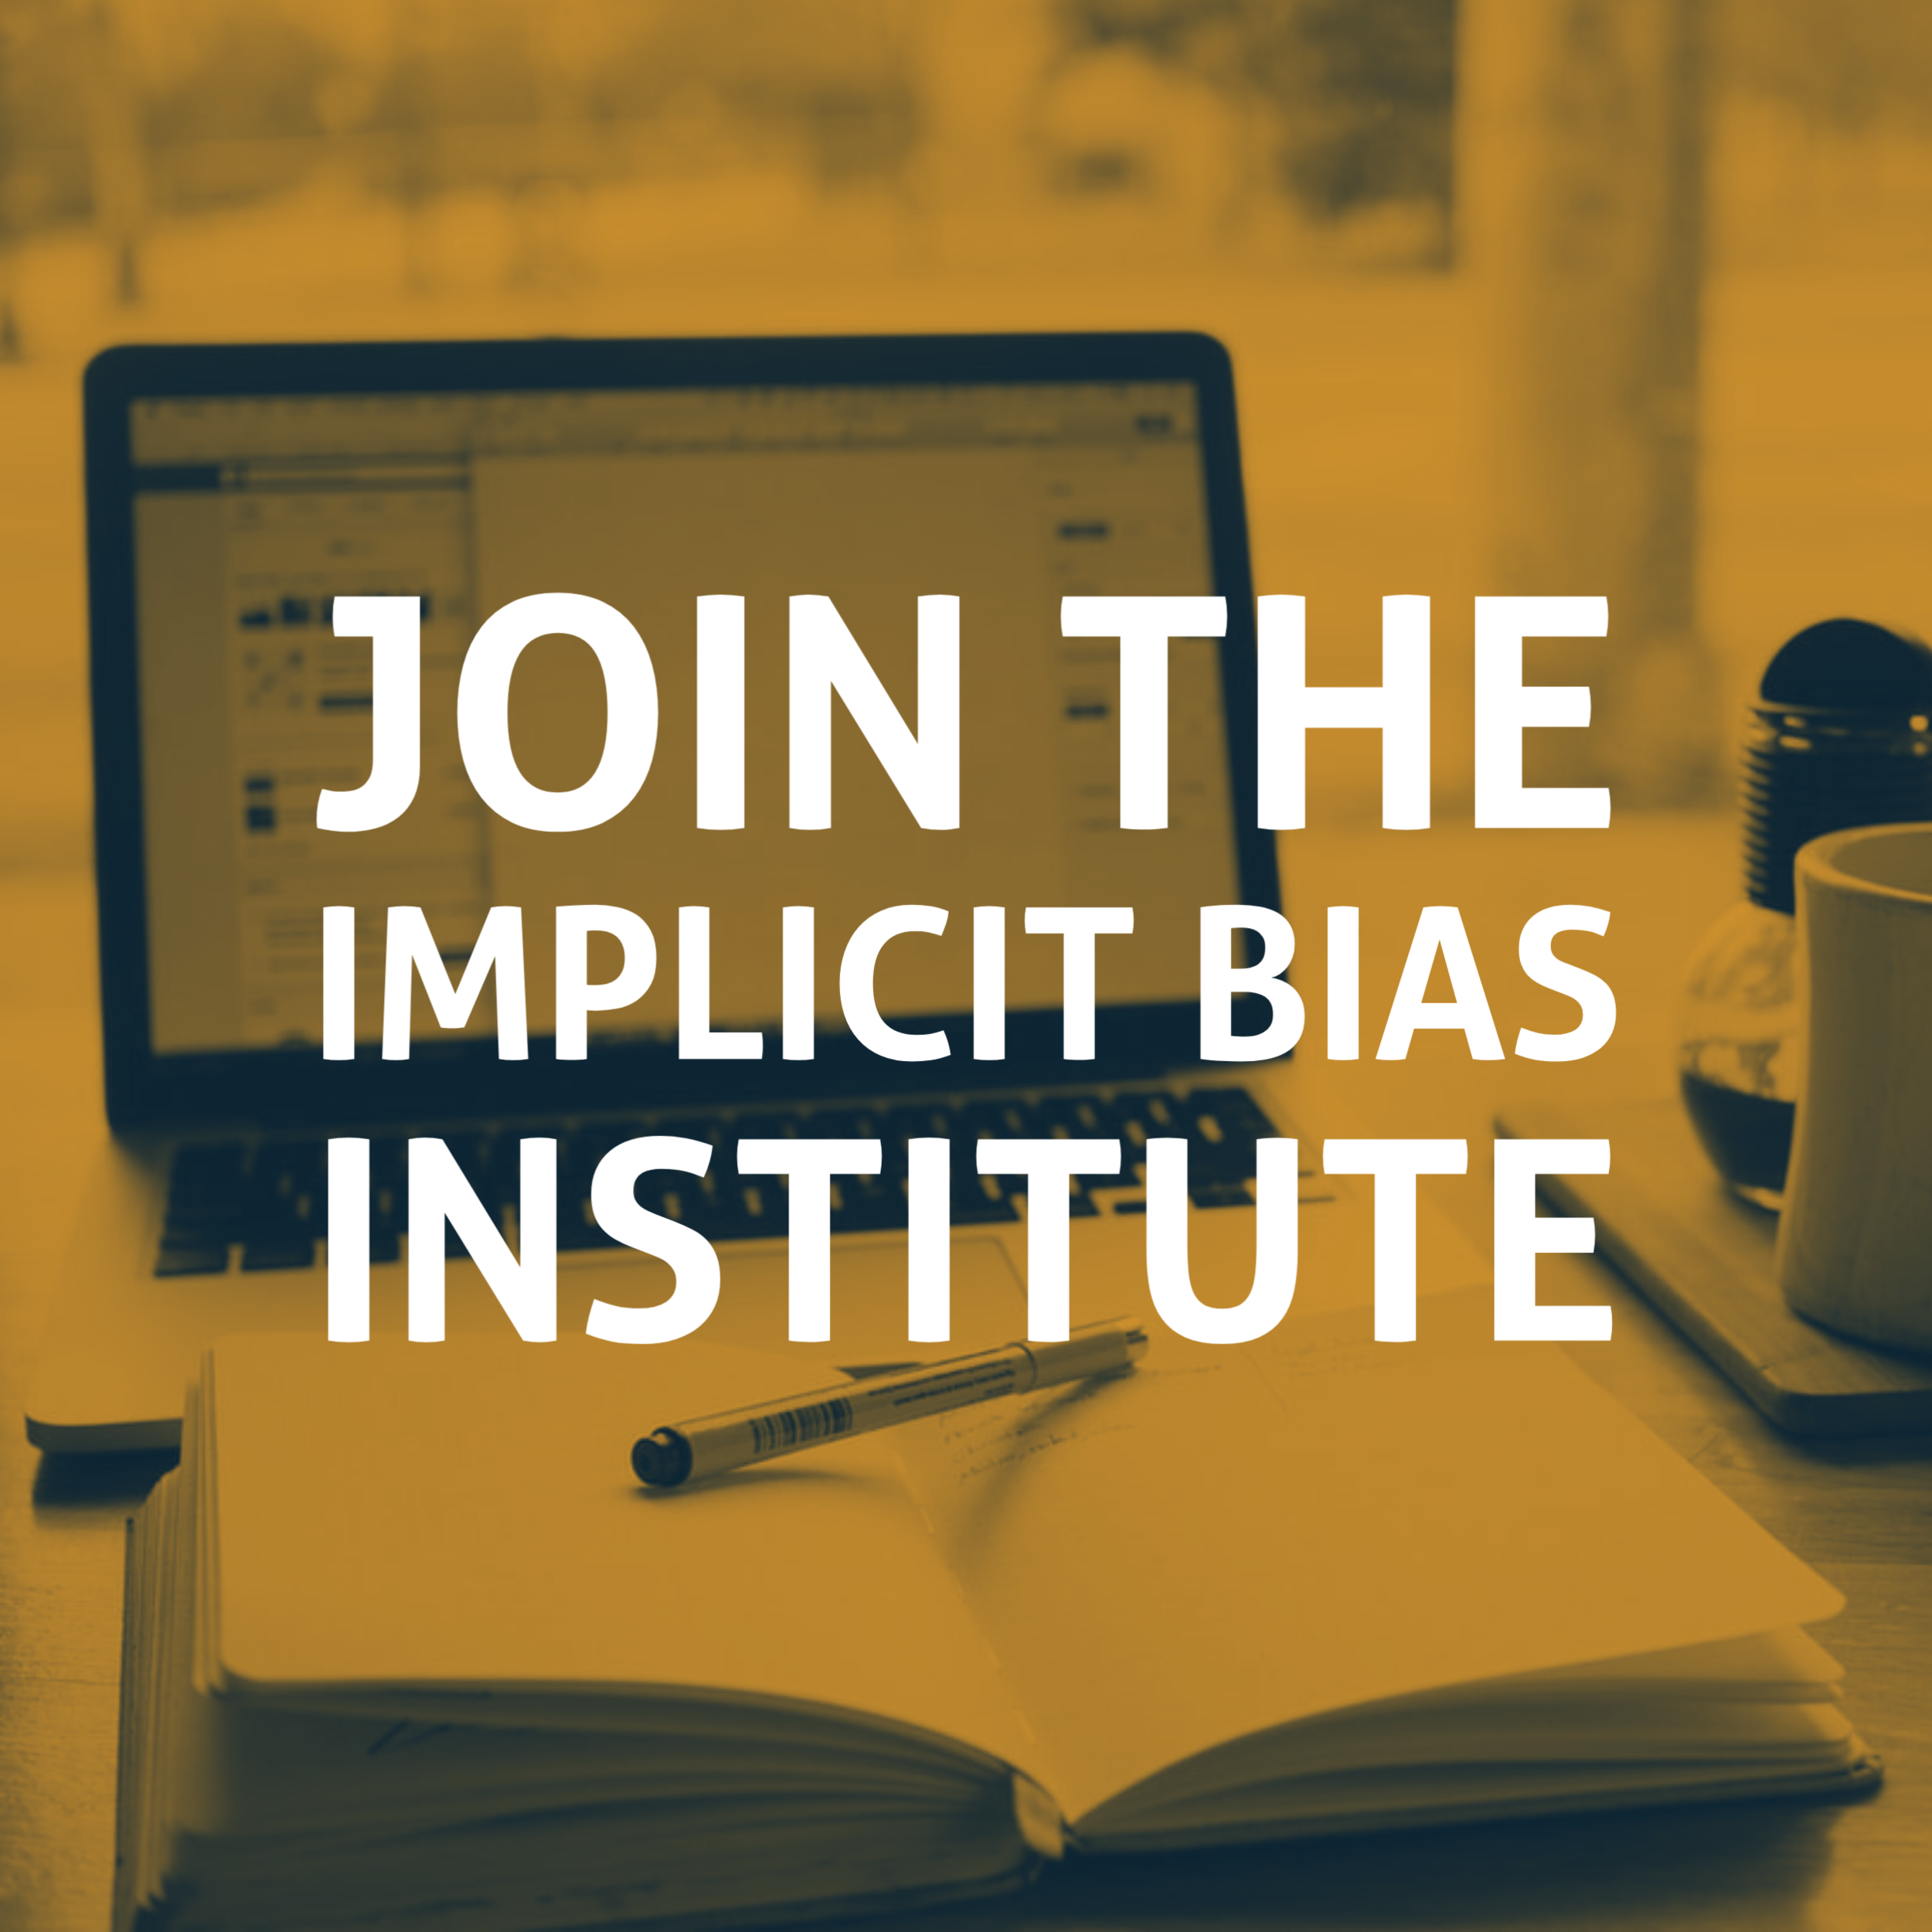 Join the implicit bias institute